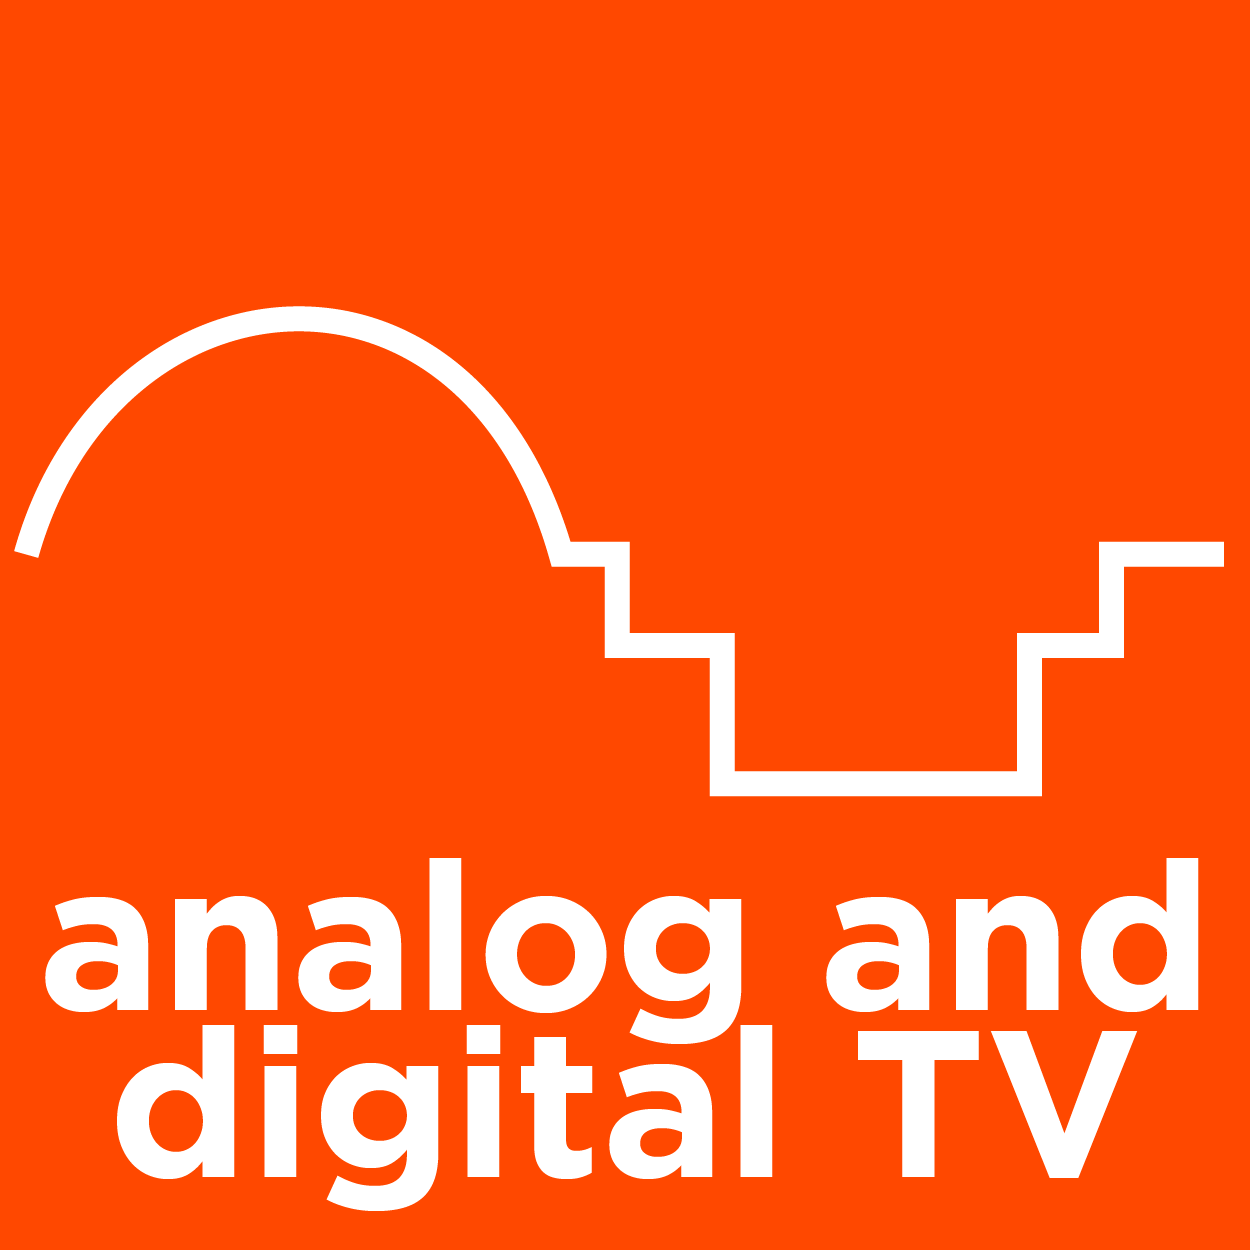 digital_analog_tv.png